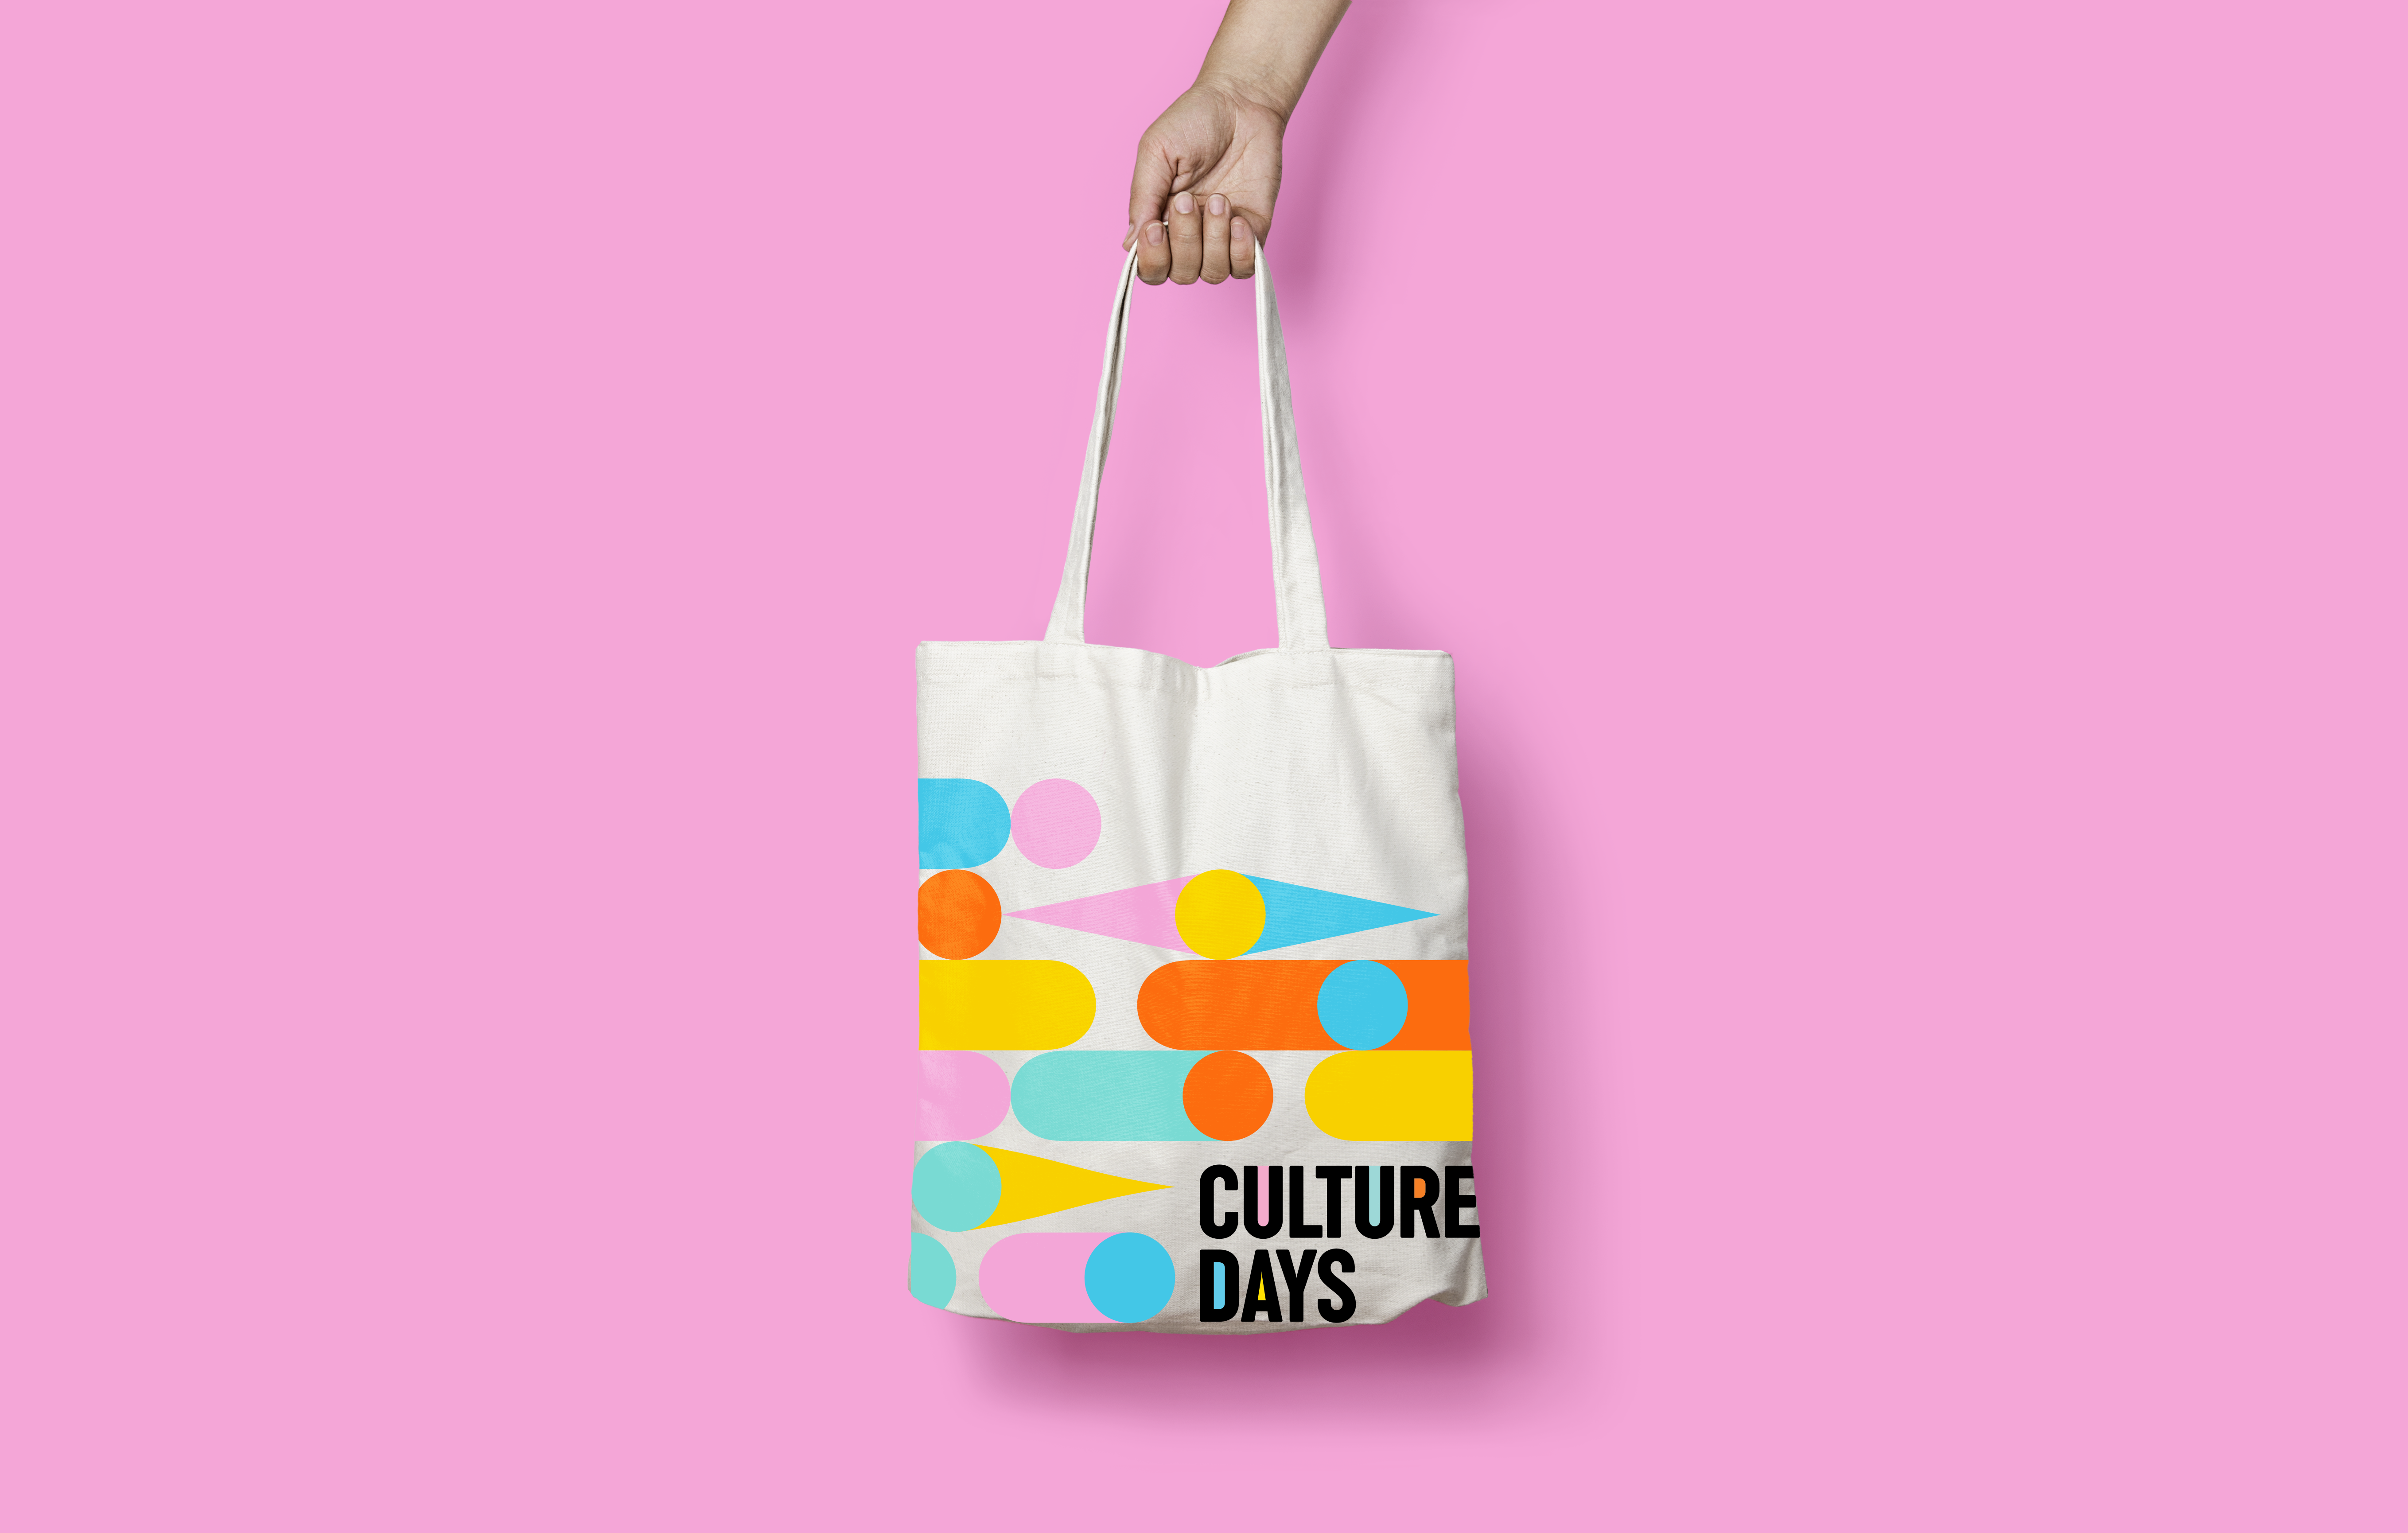 BT/A Advertising Toronto | Work | Culture Days